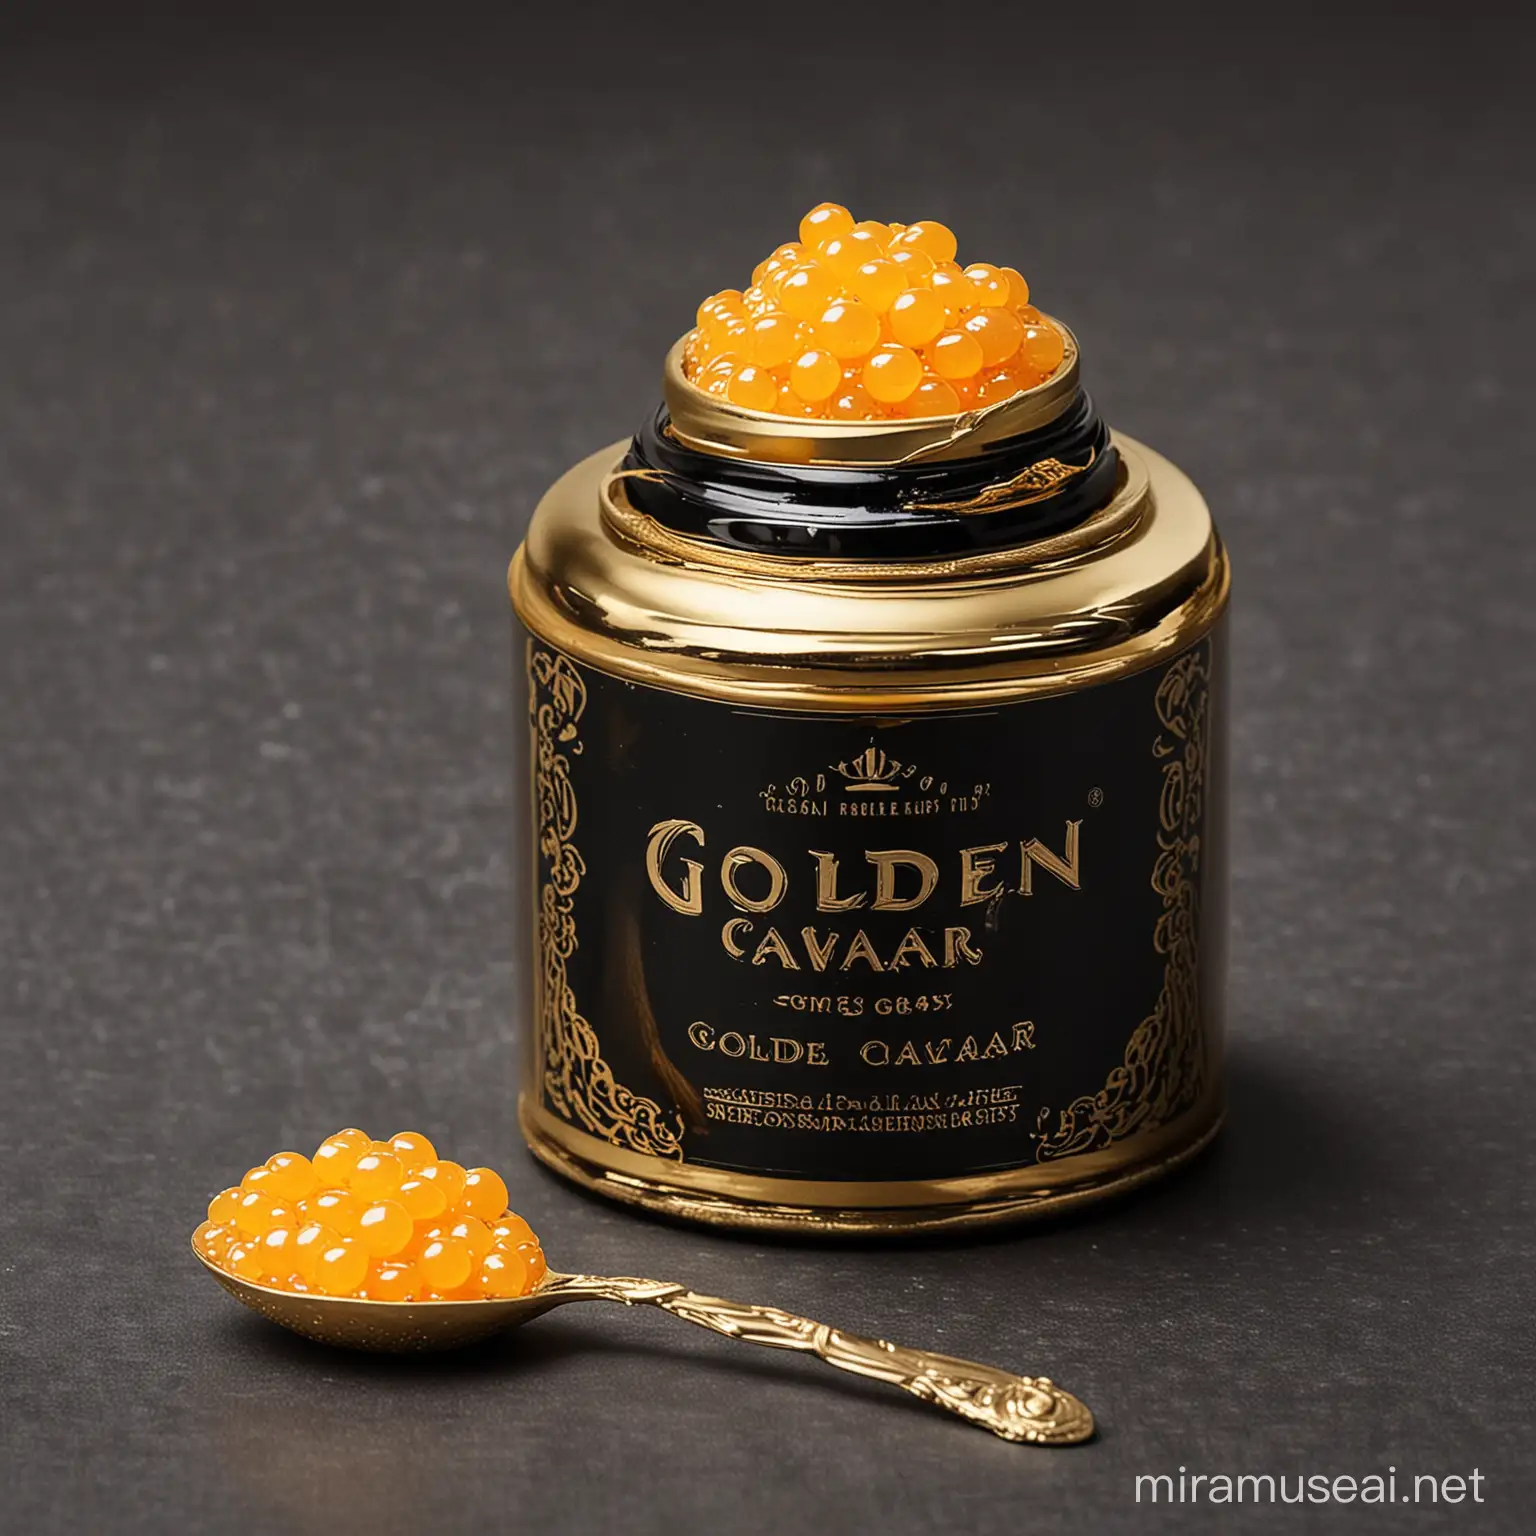 Luxurious Golden Caviar on Elegant Display